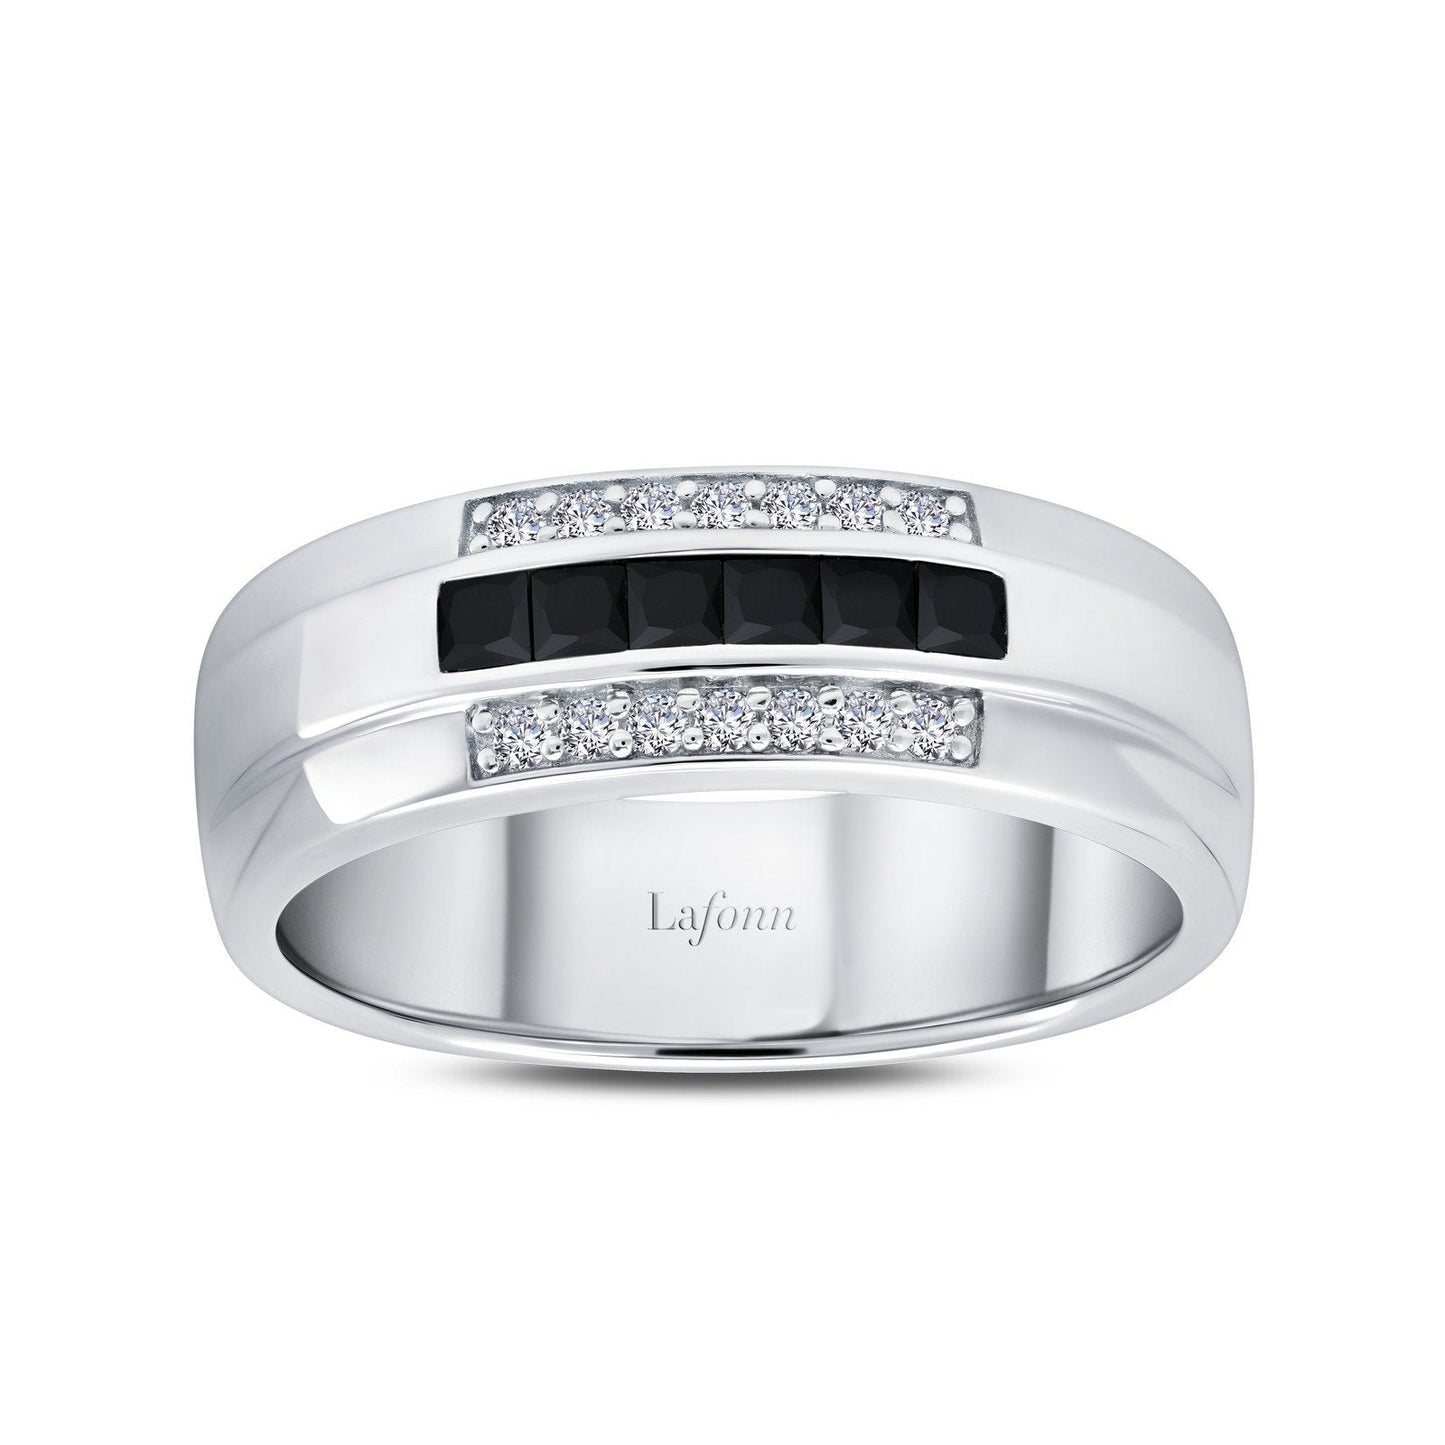 LaFonn Platinum Simulated Diamond N/A RINGS 0.74 CTW Men's Wedding Band